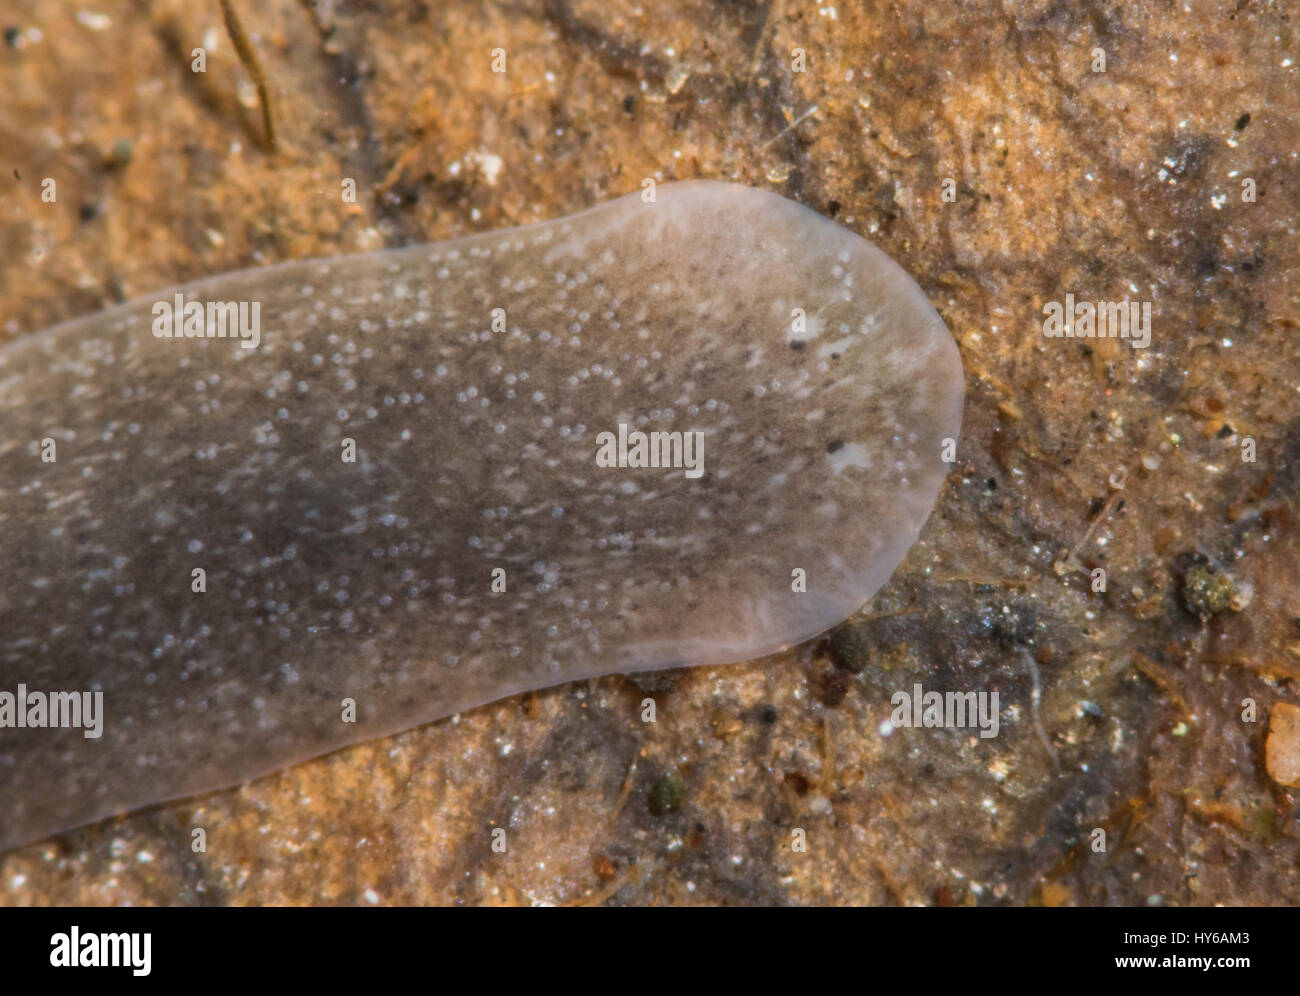 Flatworm planarian  Dugesia polychroa underwater close up of head Stock Photo